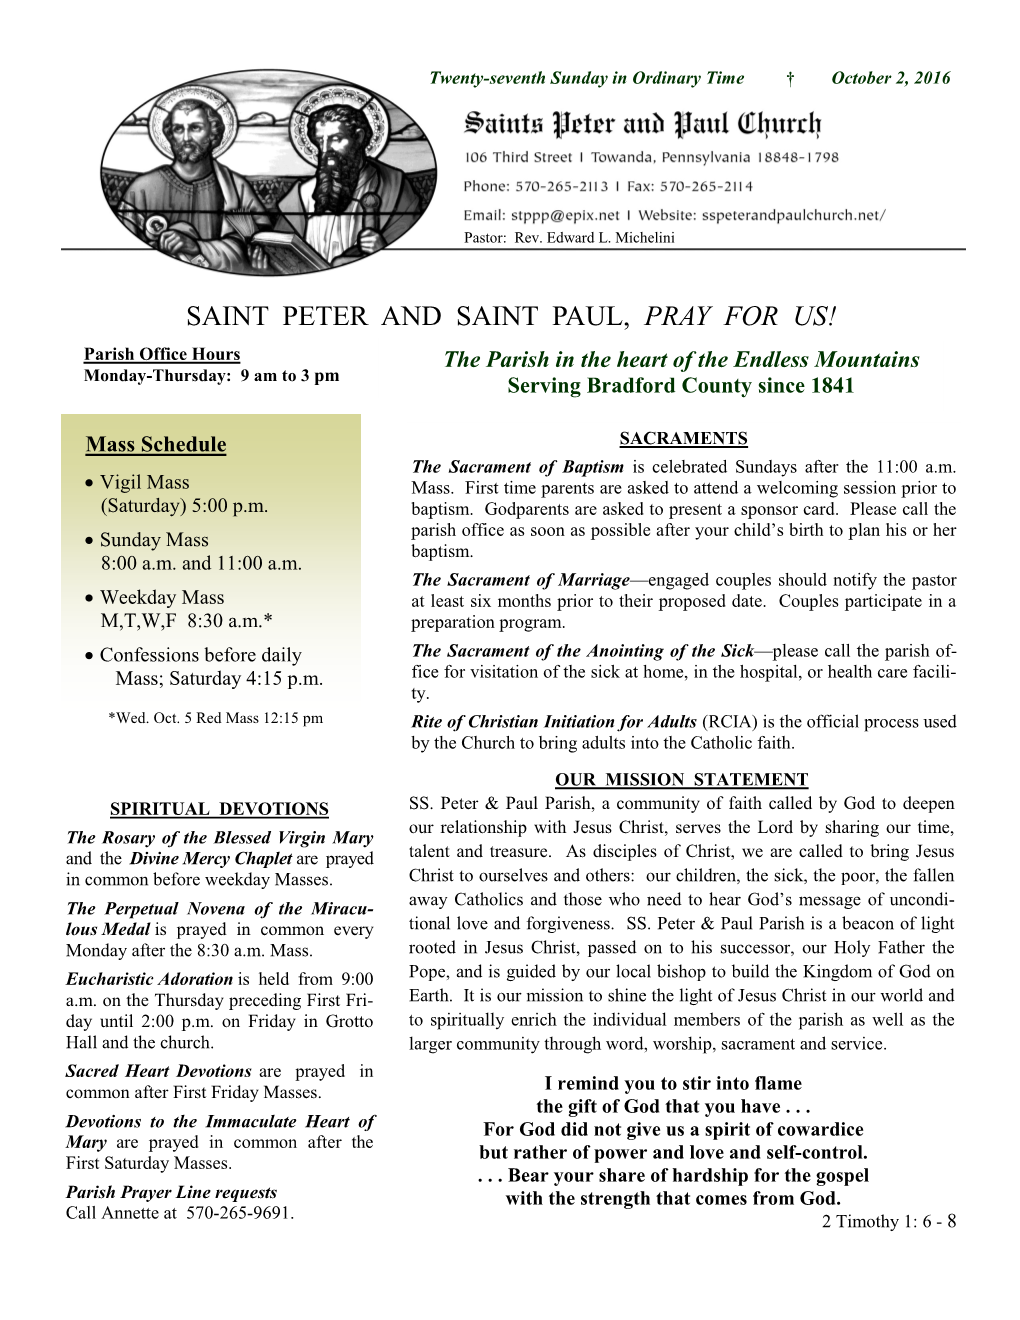 Saint Peter and Saint Paul, Pray For